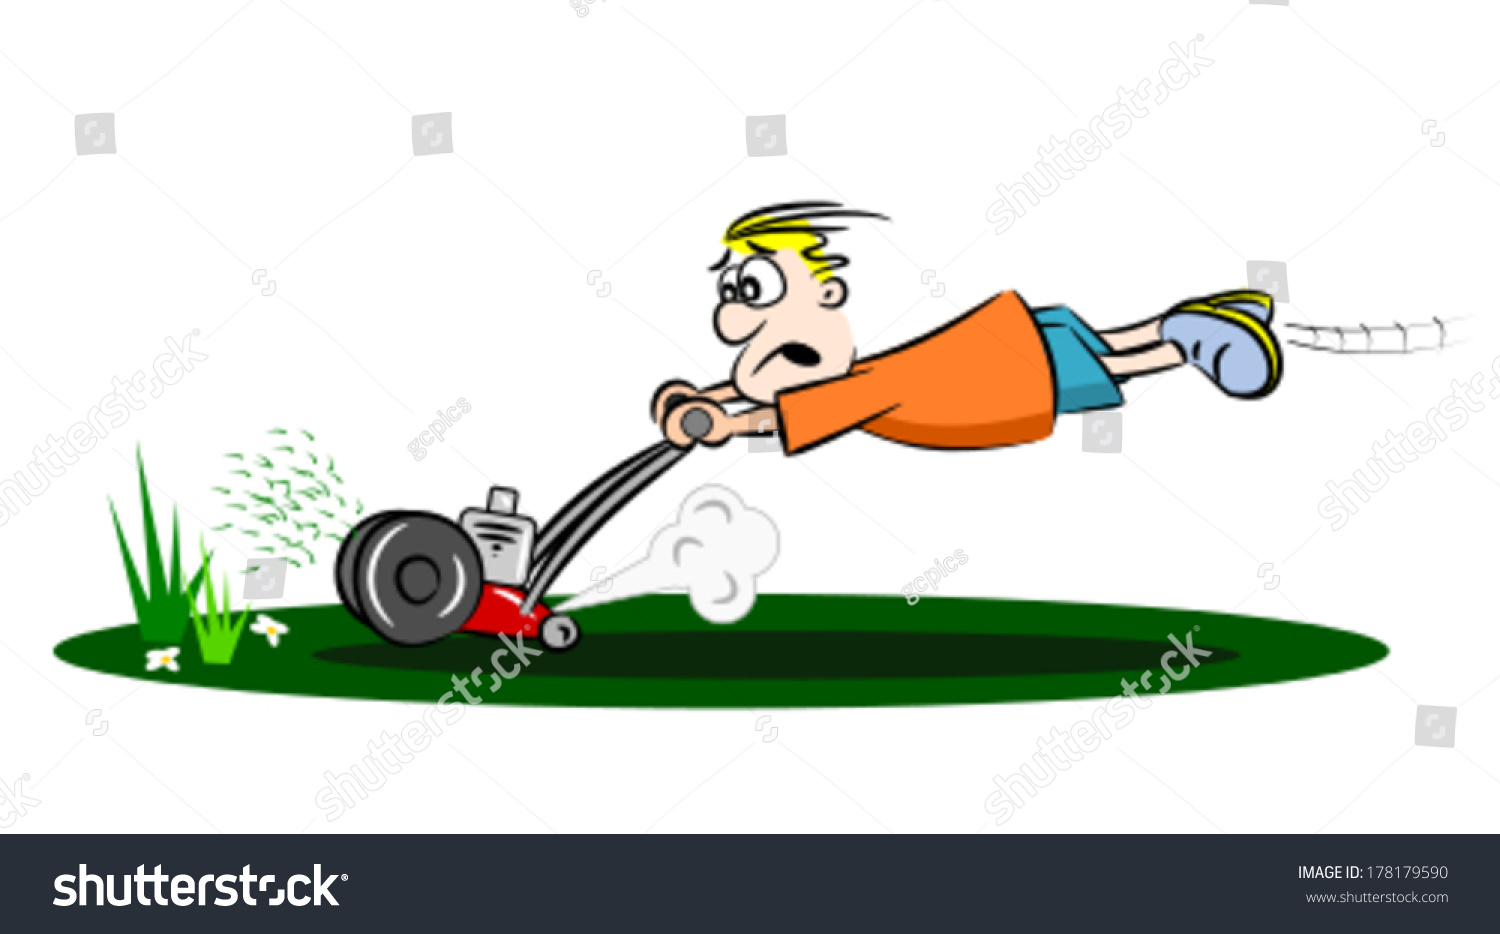 clipart of man cutting grass - photo #48